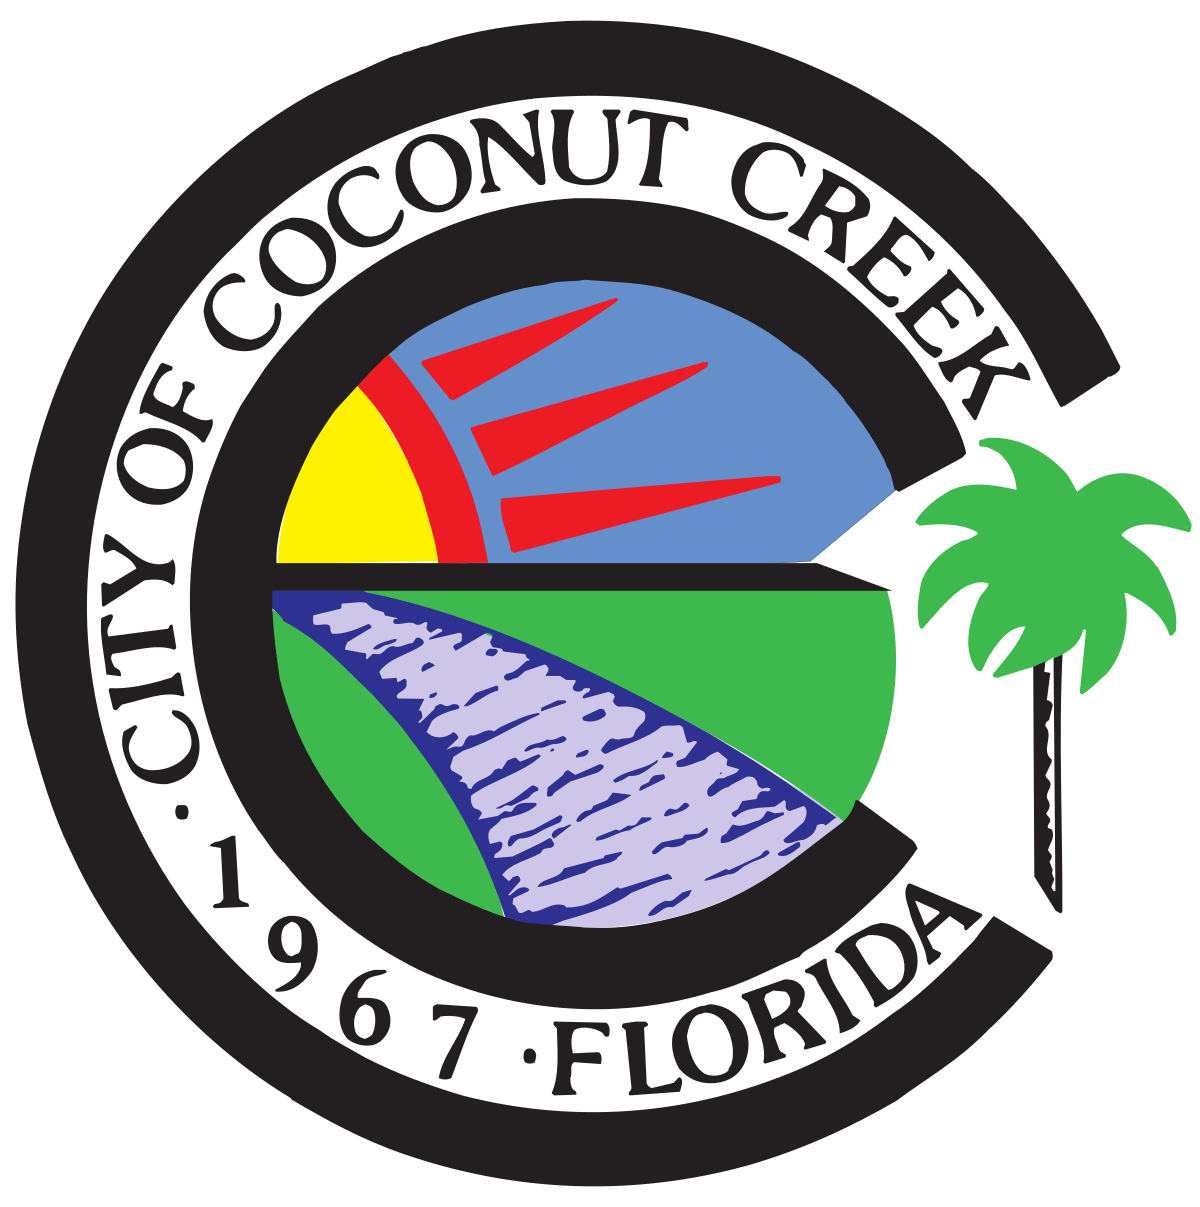 coconut creek, fl city seal logo